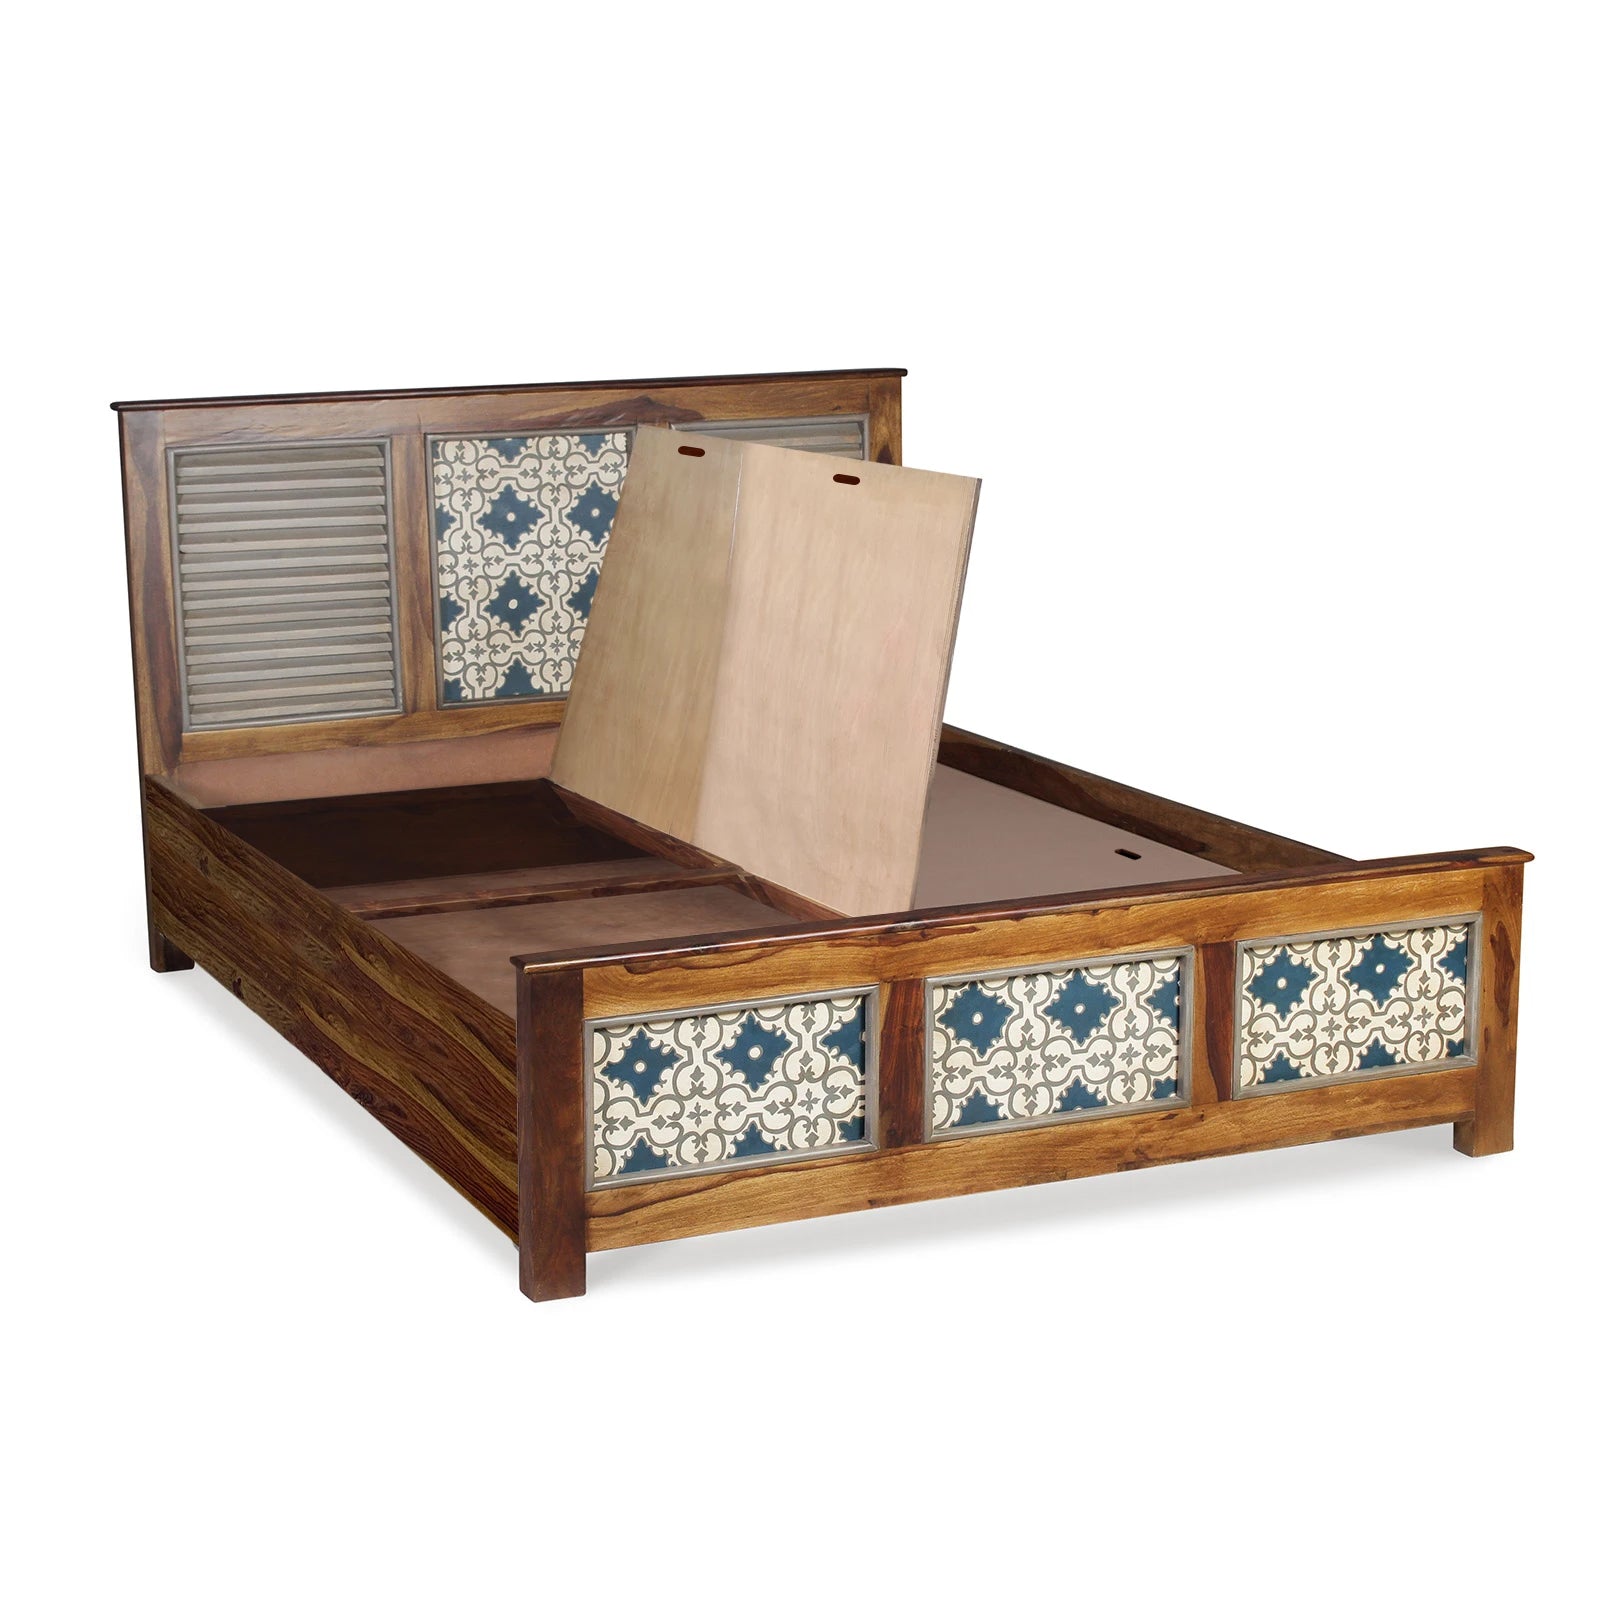 Sheesham Wood Beds online